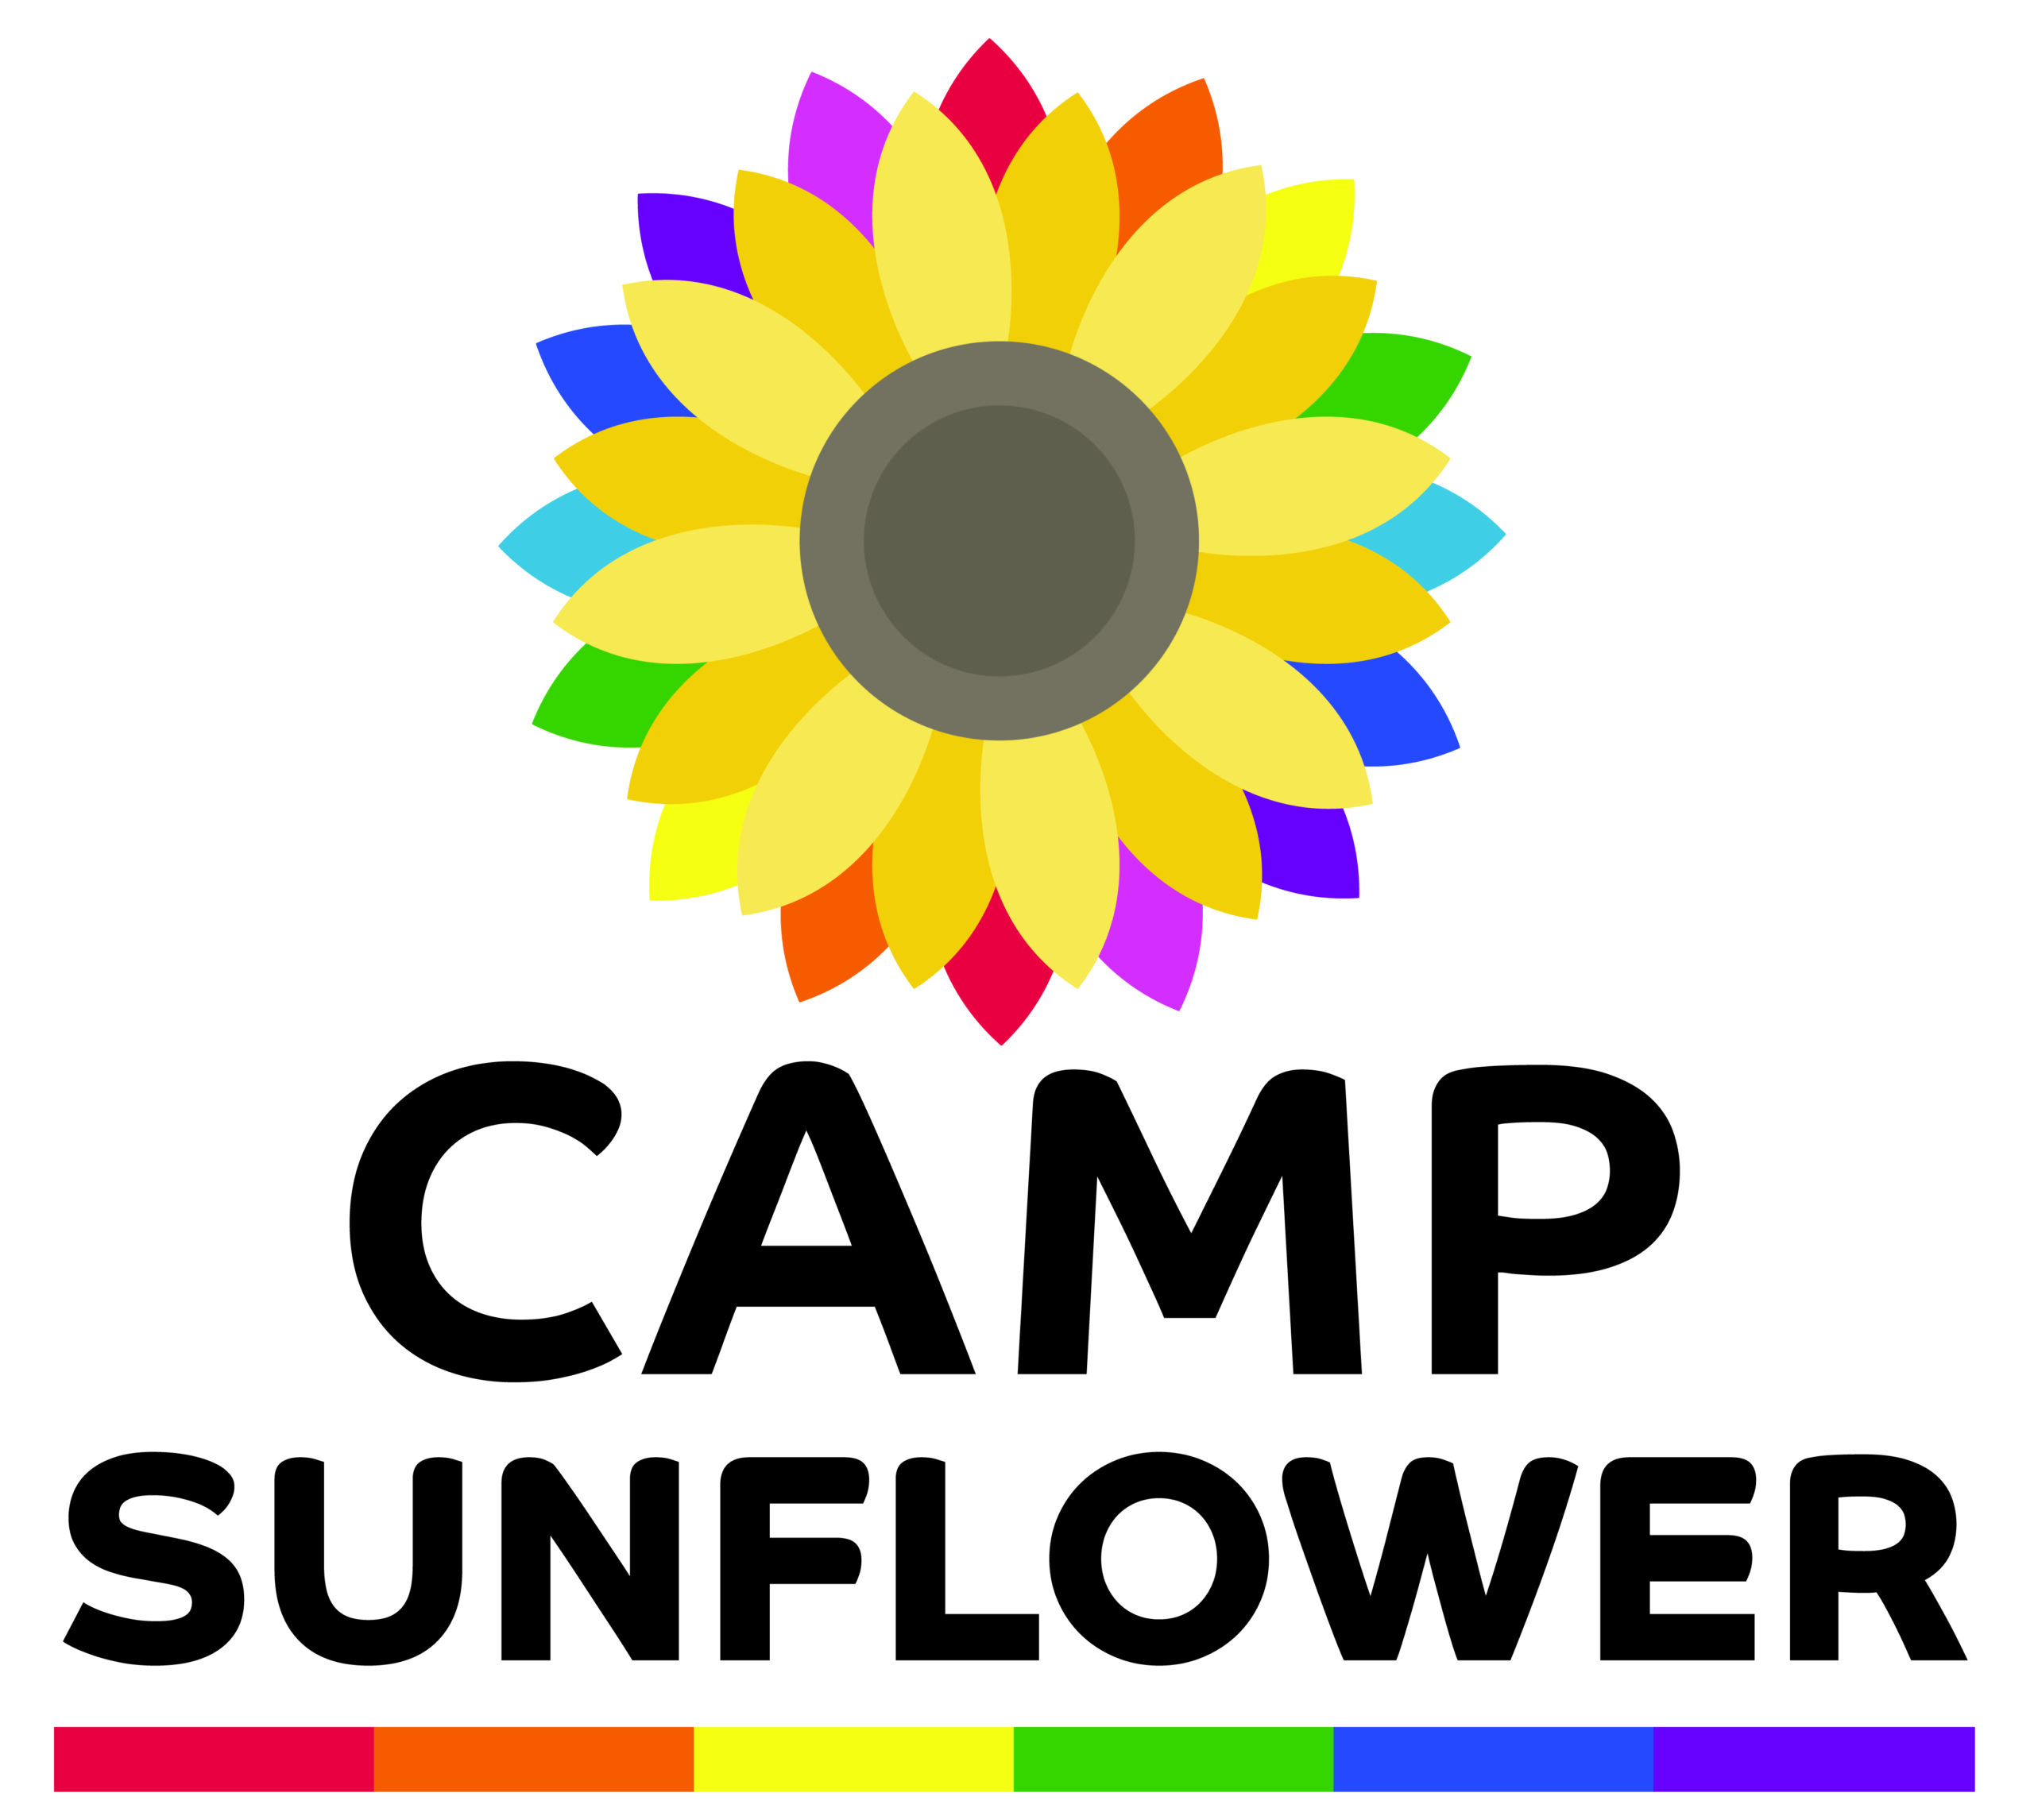 (c) Campsunflower.org